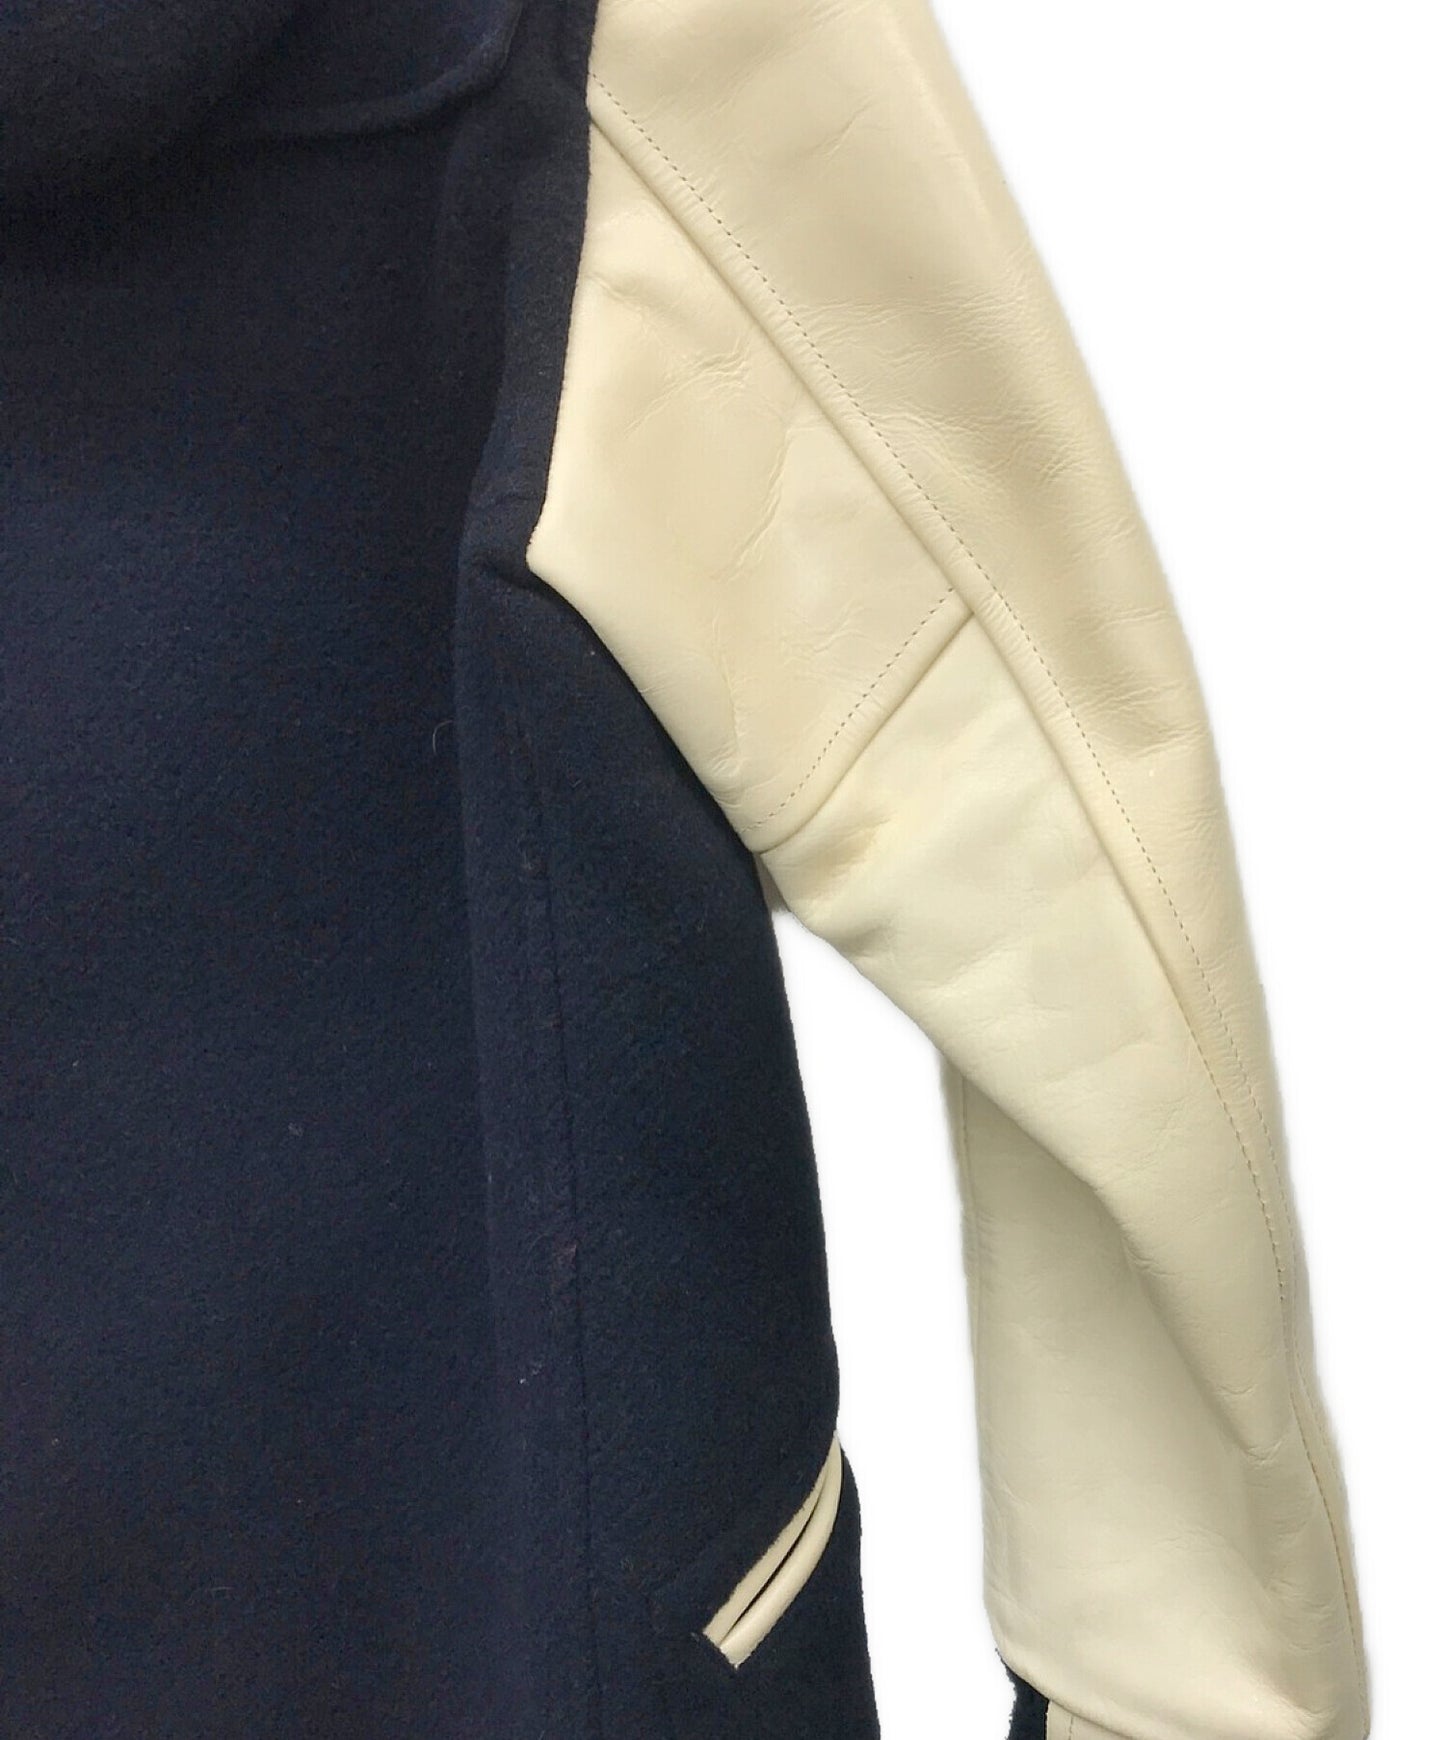 Comme des Garcons Junya Watanabe Man Duffel Coat with Varsity Jacket UJ-C001과 같은 송아지 가죽 소매